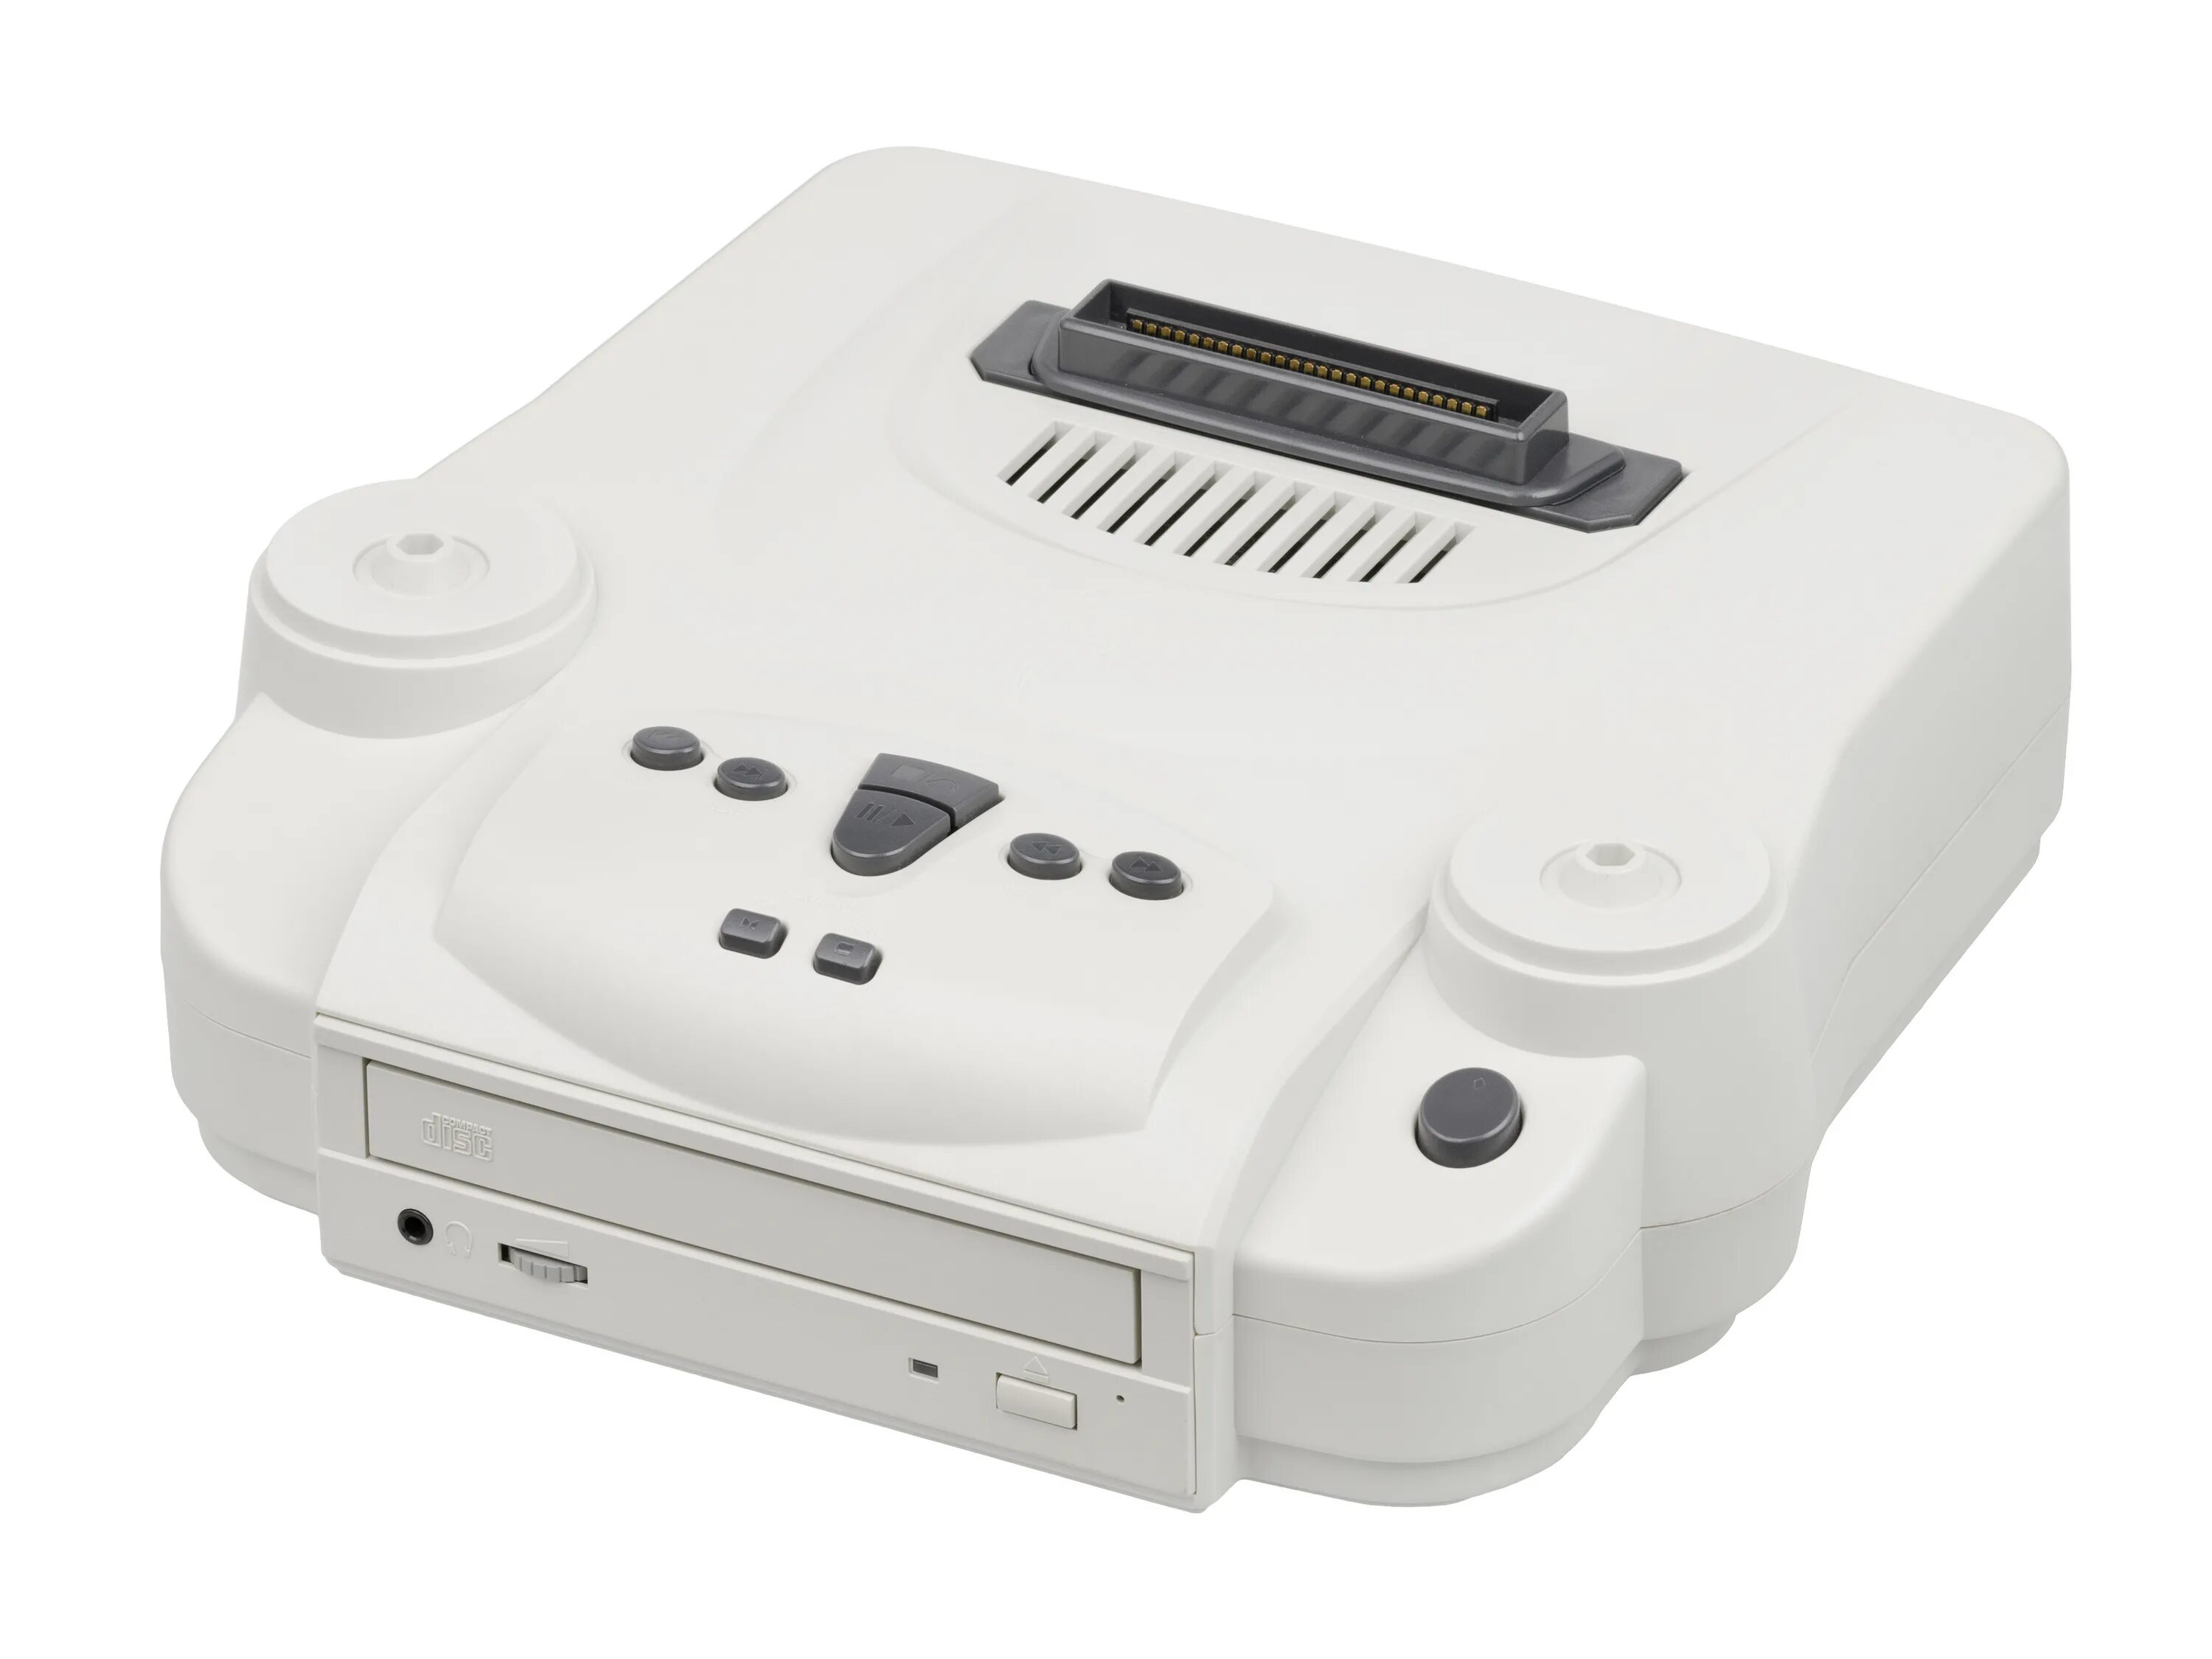 Приставка nintendo 64. Nintendo 64 белый корпус. Приставка Нинтендо 64. Nintendo 64 Gamepad. Nintendo 64 картриджи.